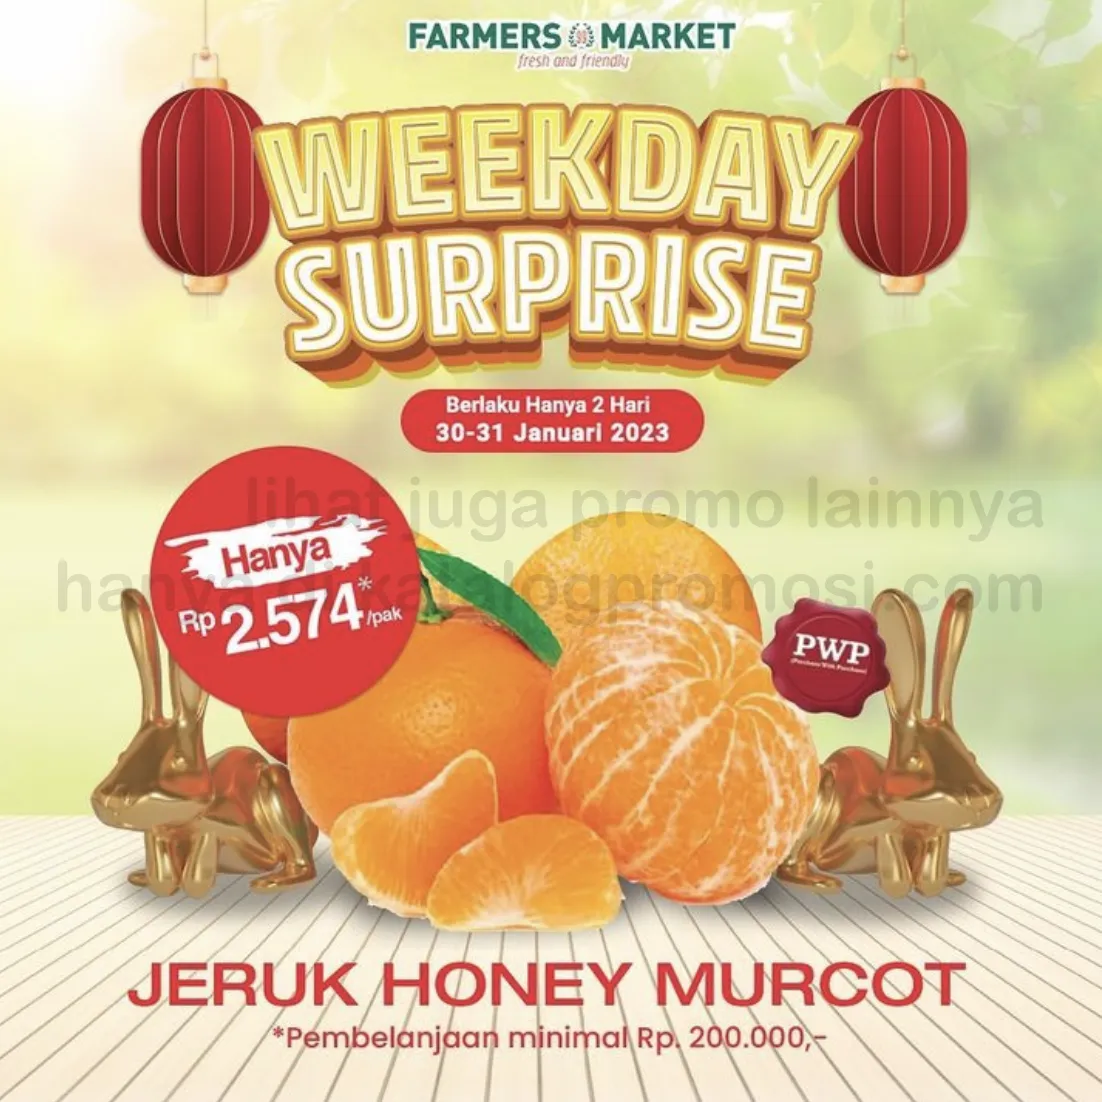 Promo FARMERS MARKET tebus murah jeruk honey murcot Rp 2.574/Pack